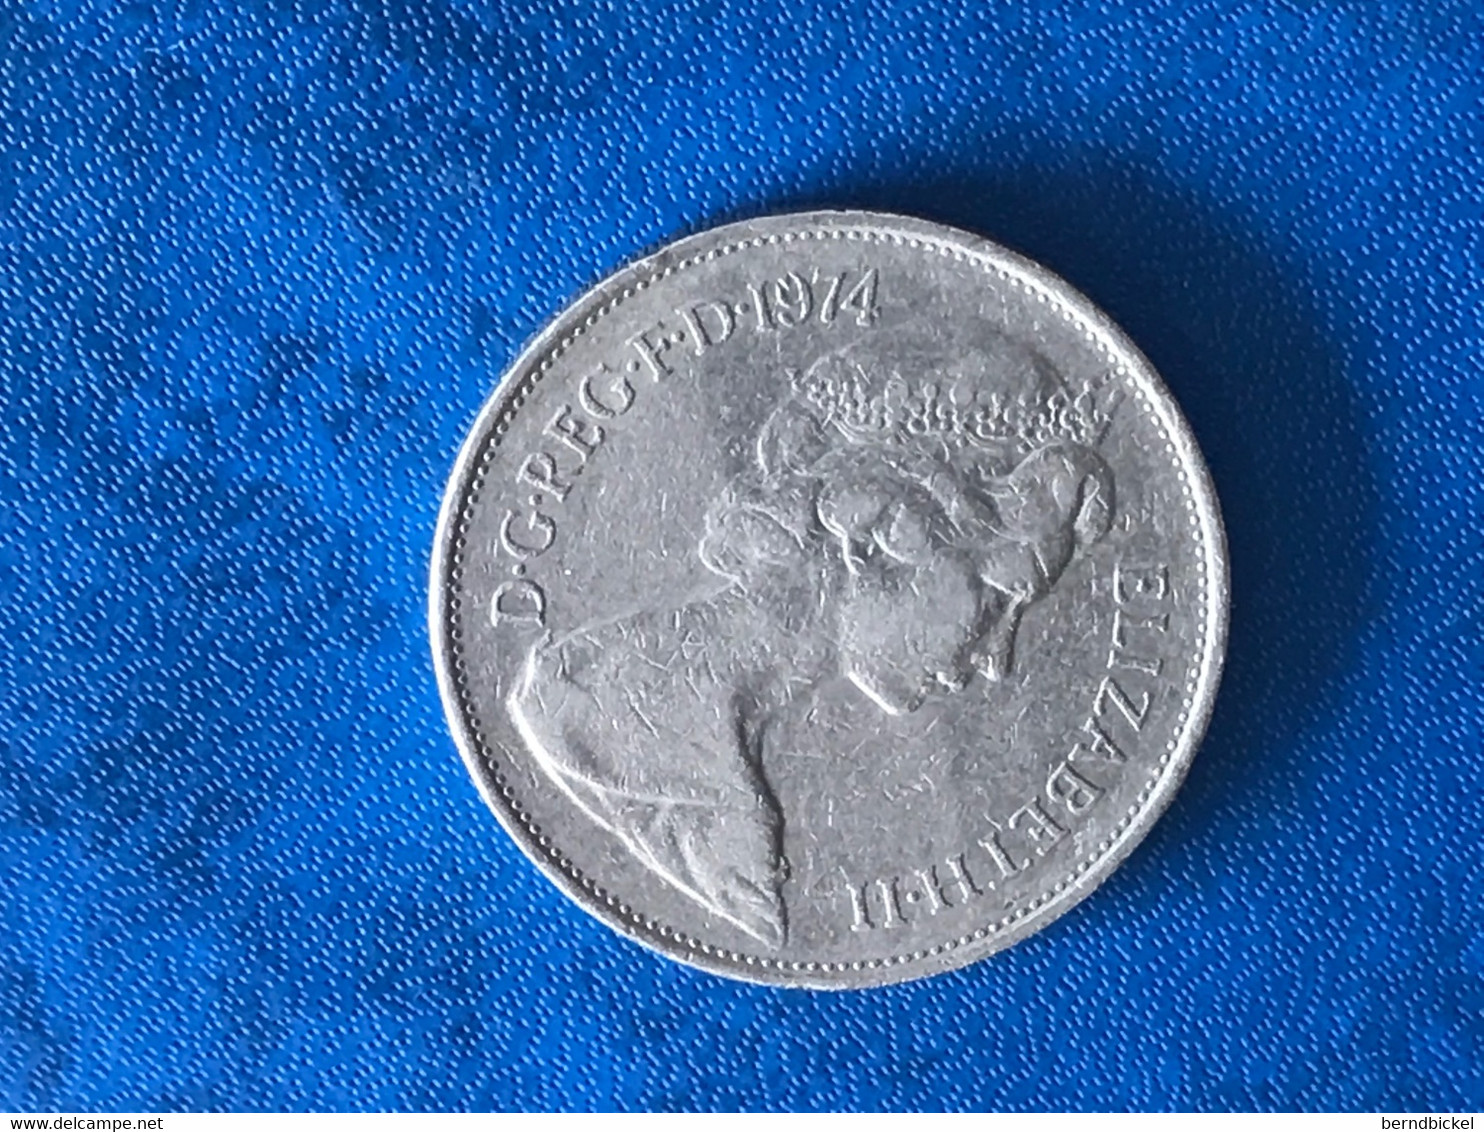 Münze Münzen Umlaufmünze Großbritannien 10 New Pence 1974 - 10 Pence & 10 New Pence